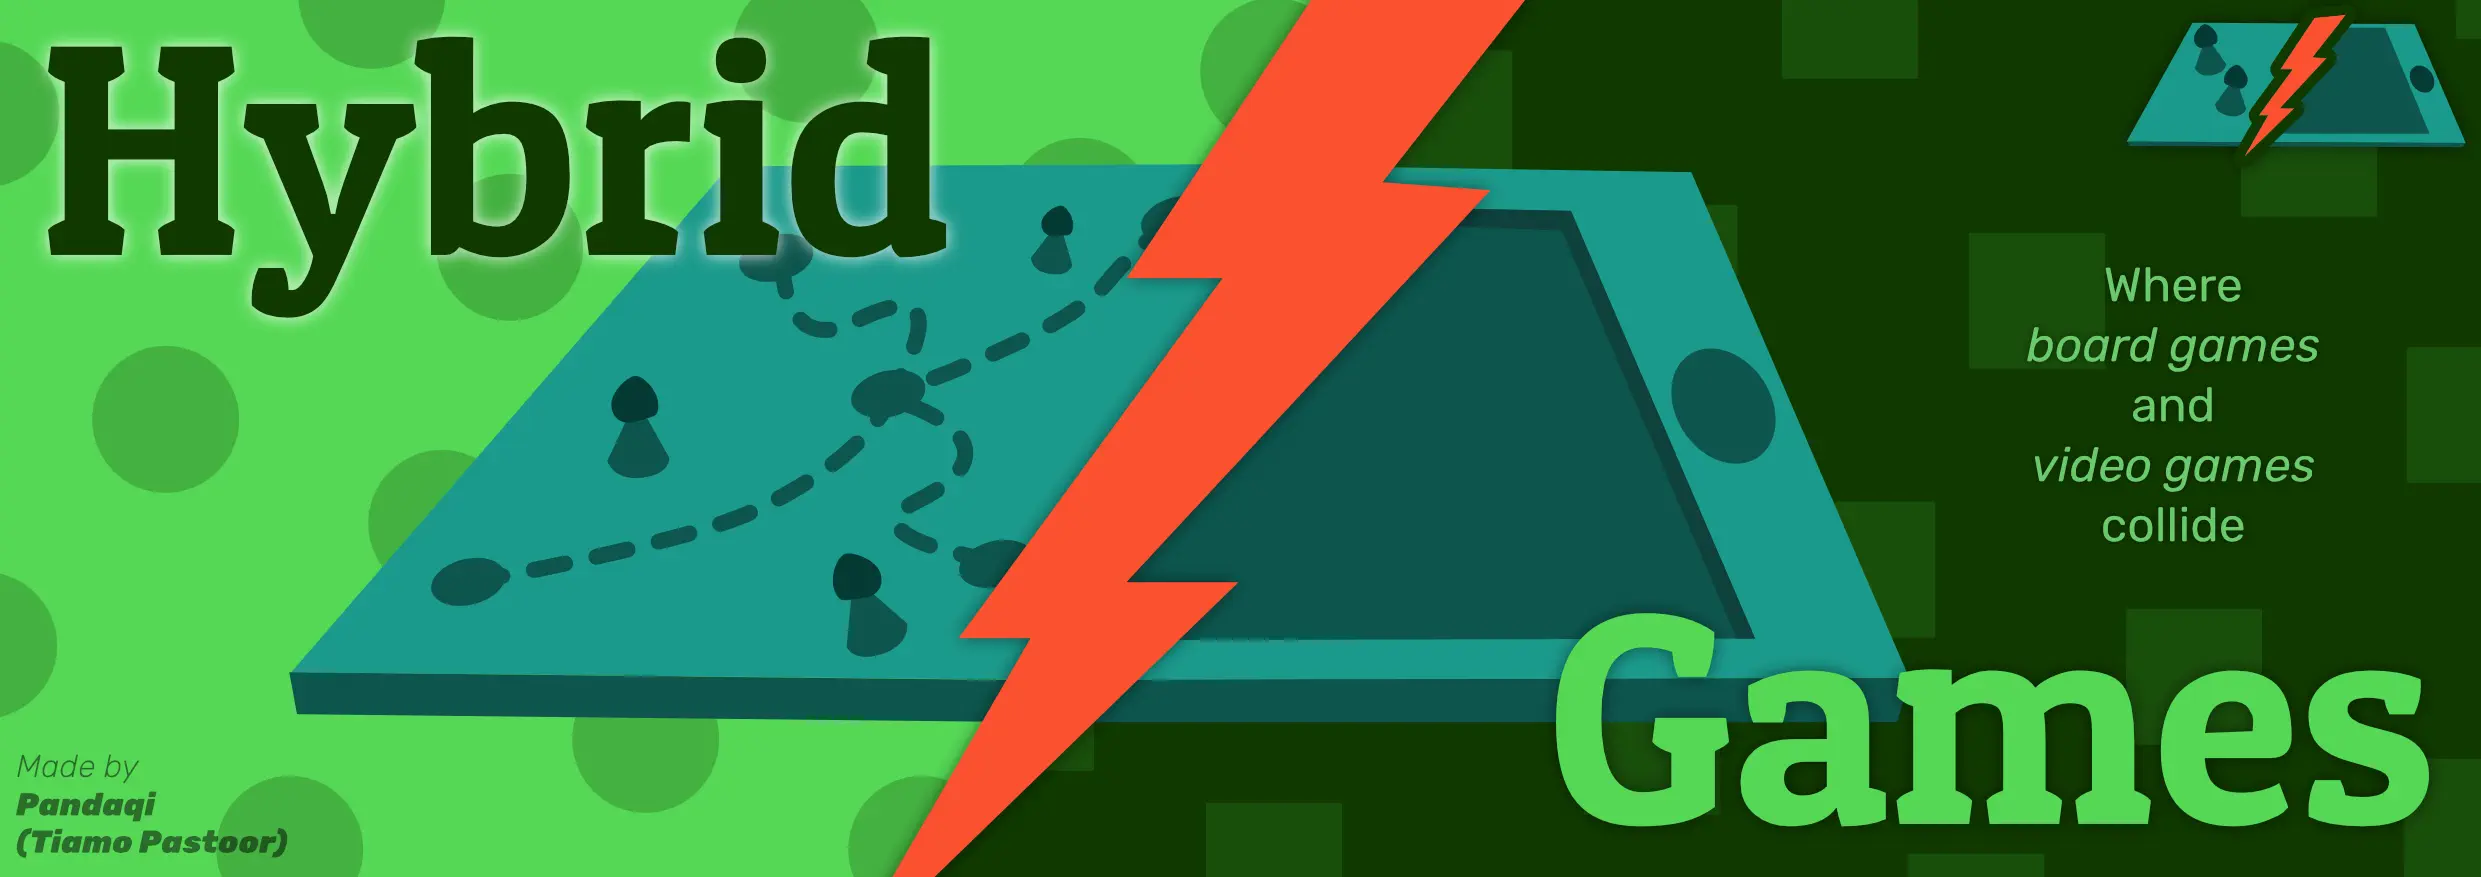 Hybrid Games logo